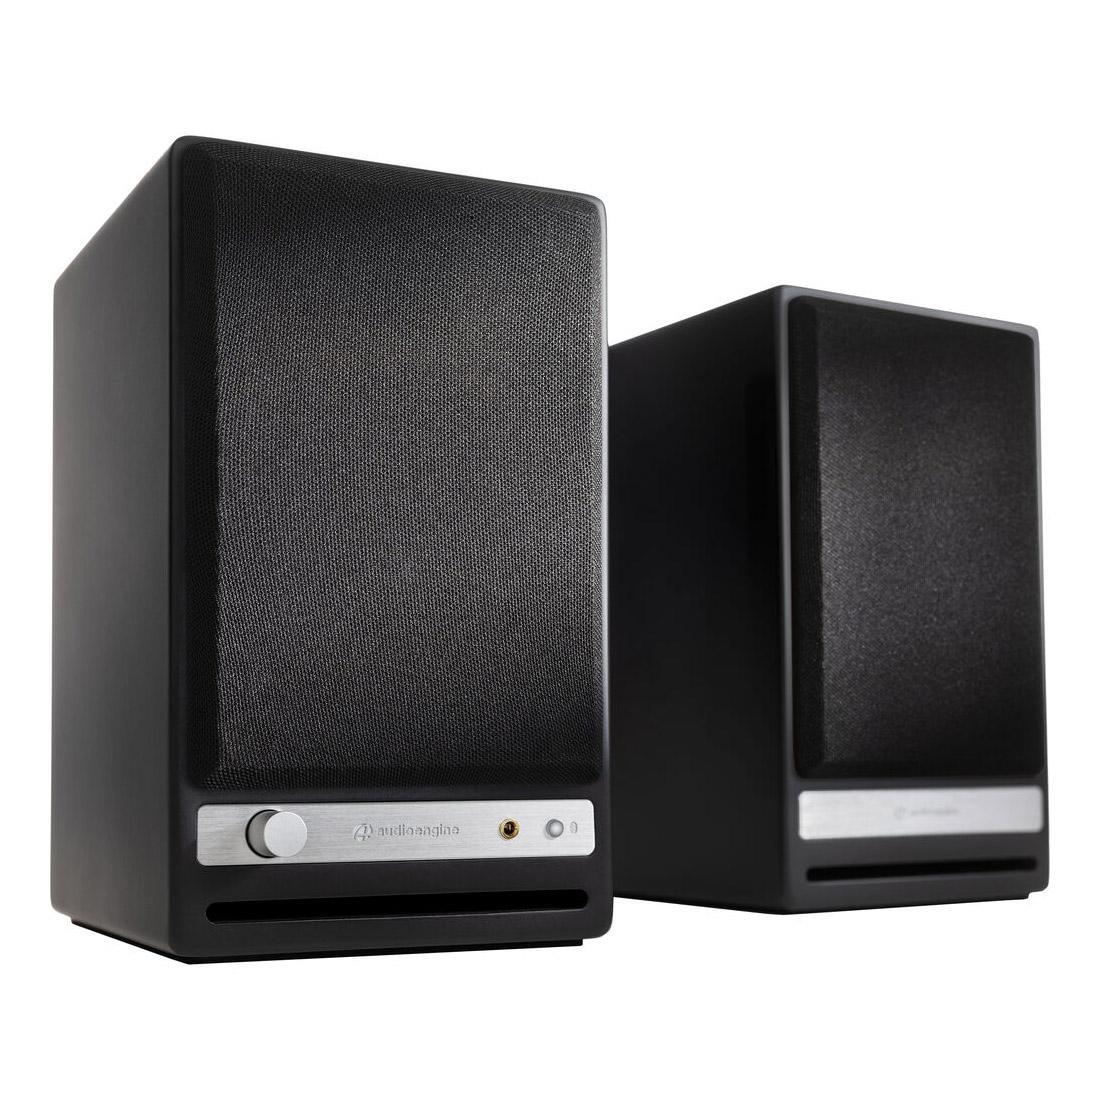 Audioengine HD4 Powered Wireless Desktop Speakers - Satin Black